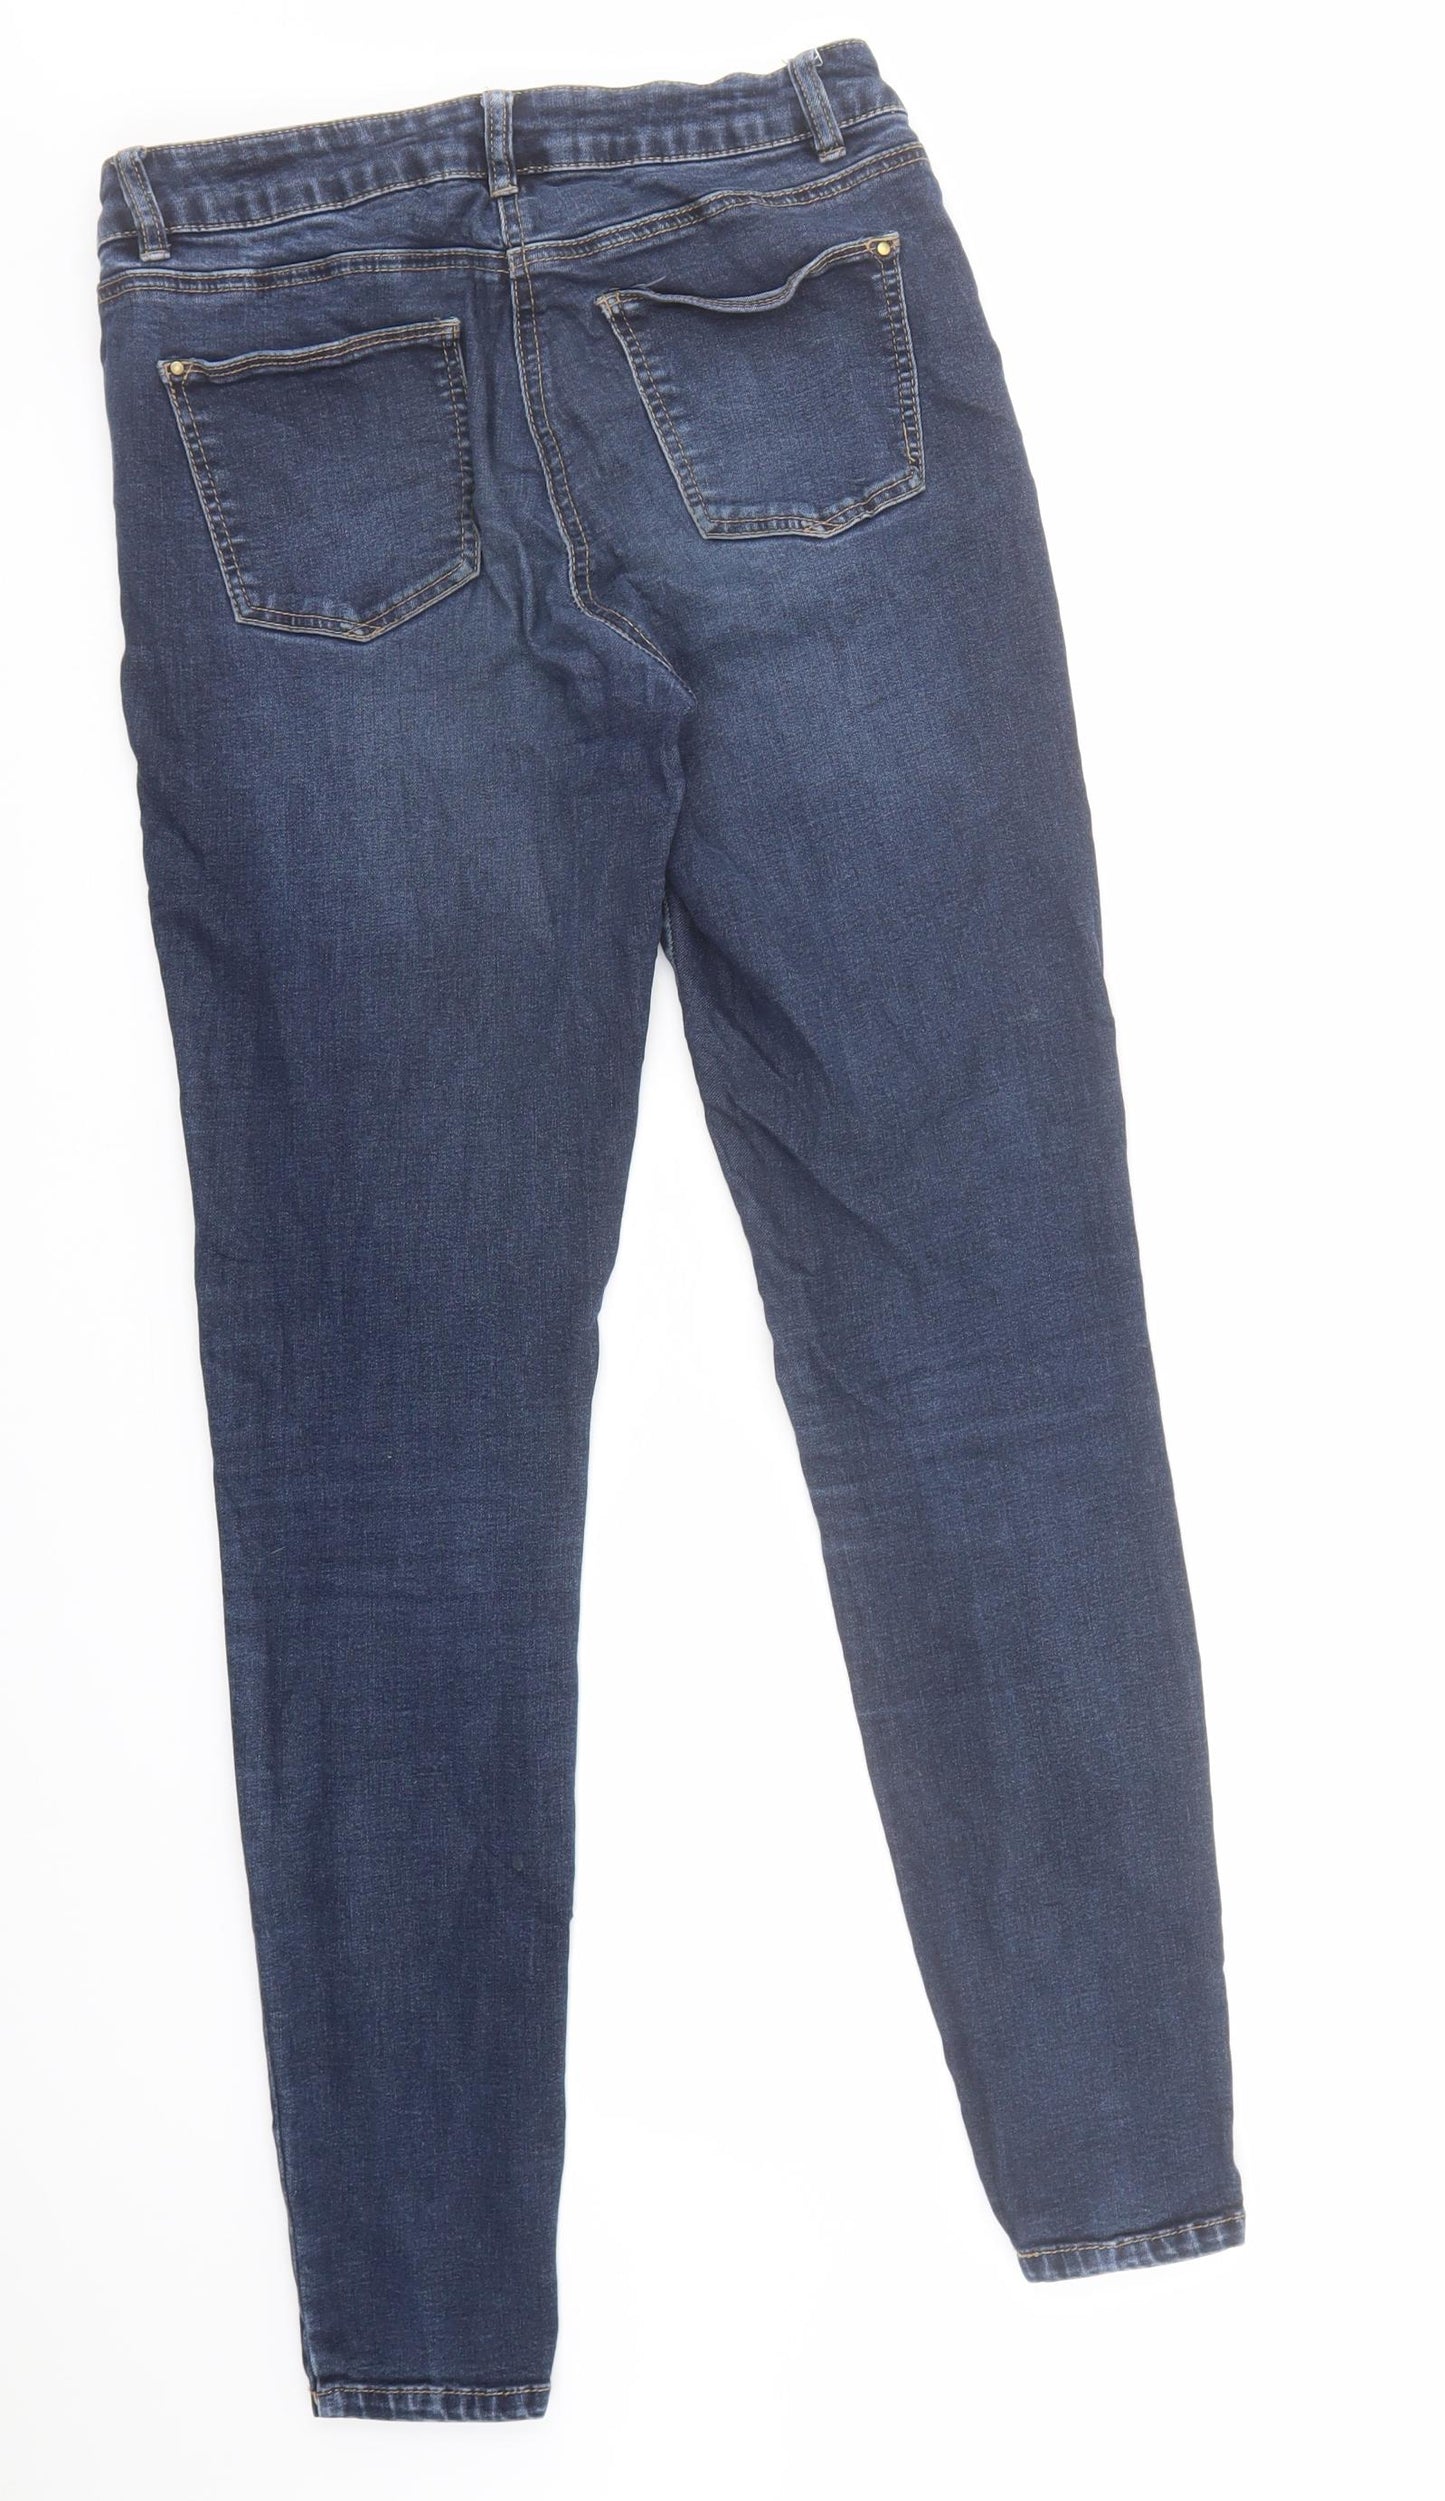 TU Womens Blue Cotton Skinny Jeans Size 10 L30 in Regular Zip